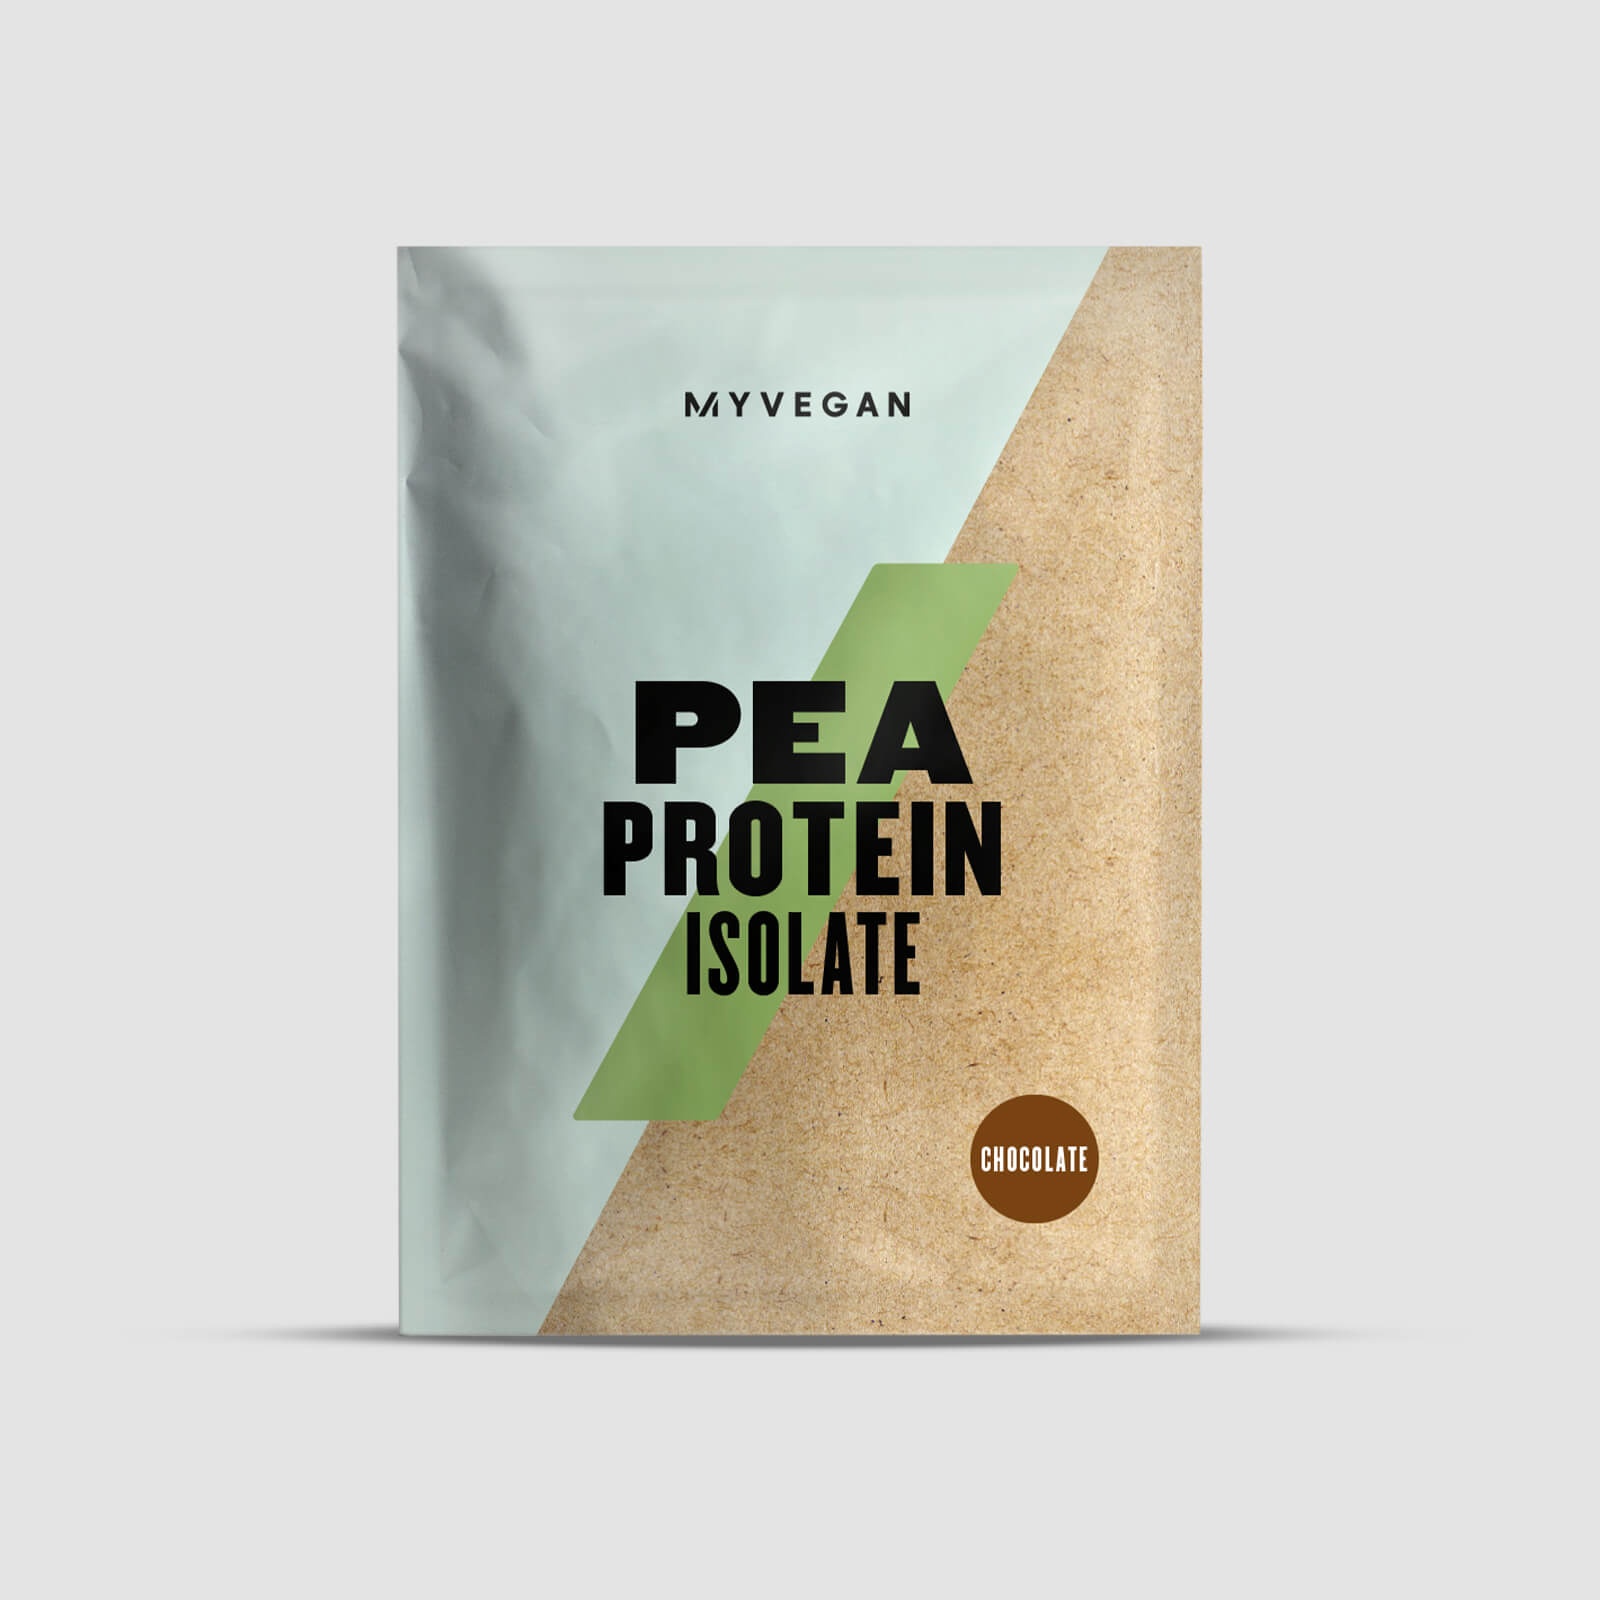 Myvegan Pea Protein Isolate (Sample) - 30g - Chocolate